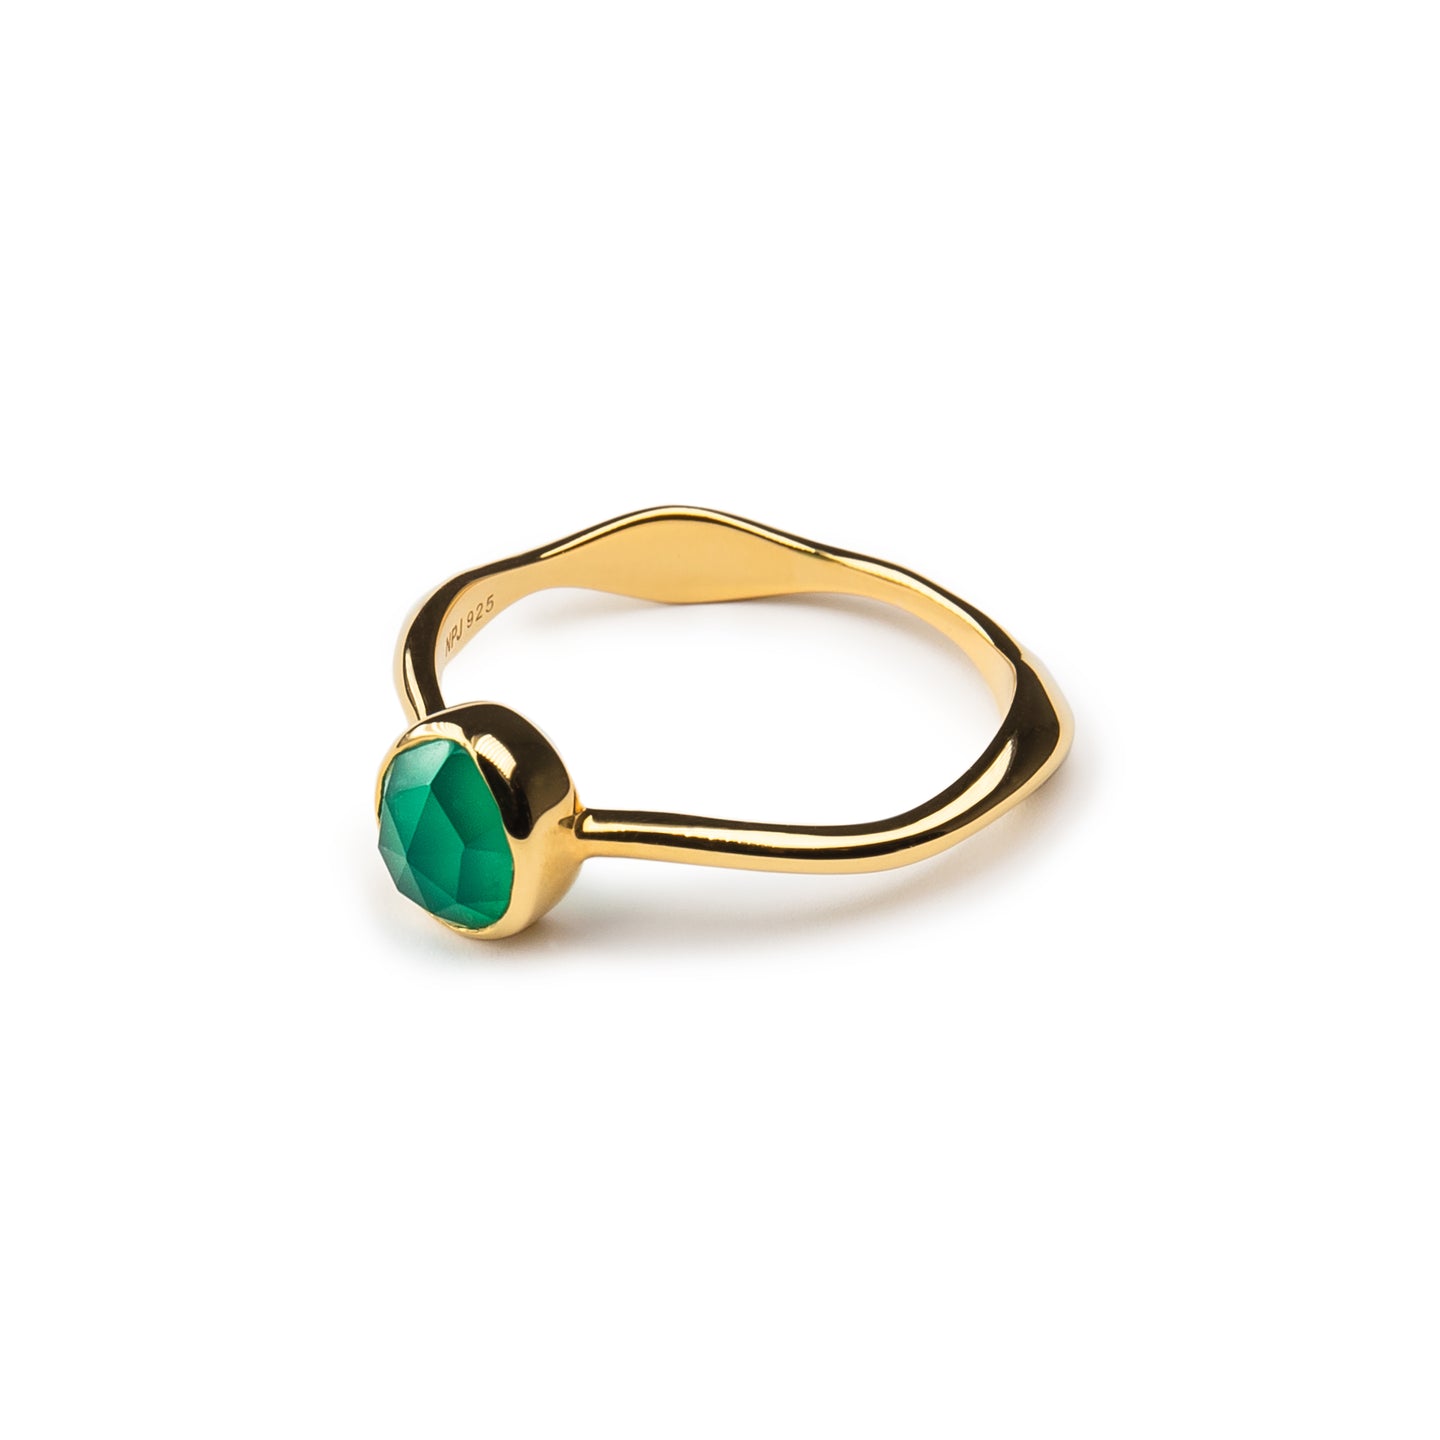 Rose Cut Green Onyx Ring in 14K Gold Vermeil